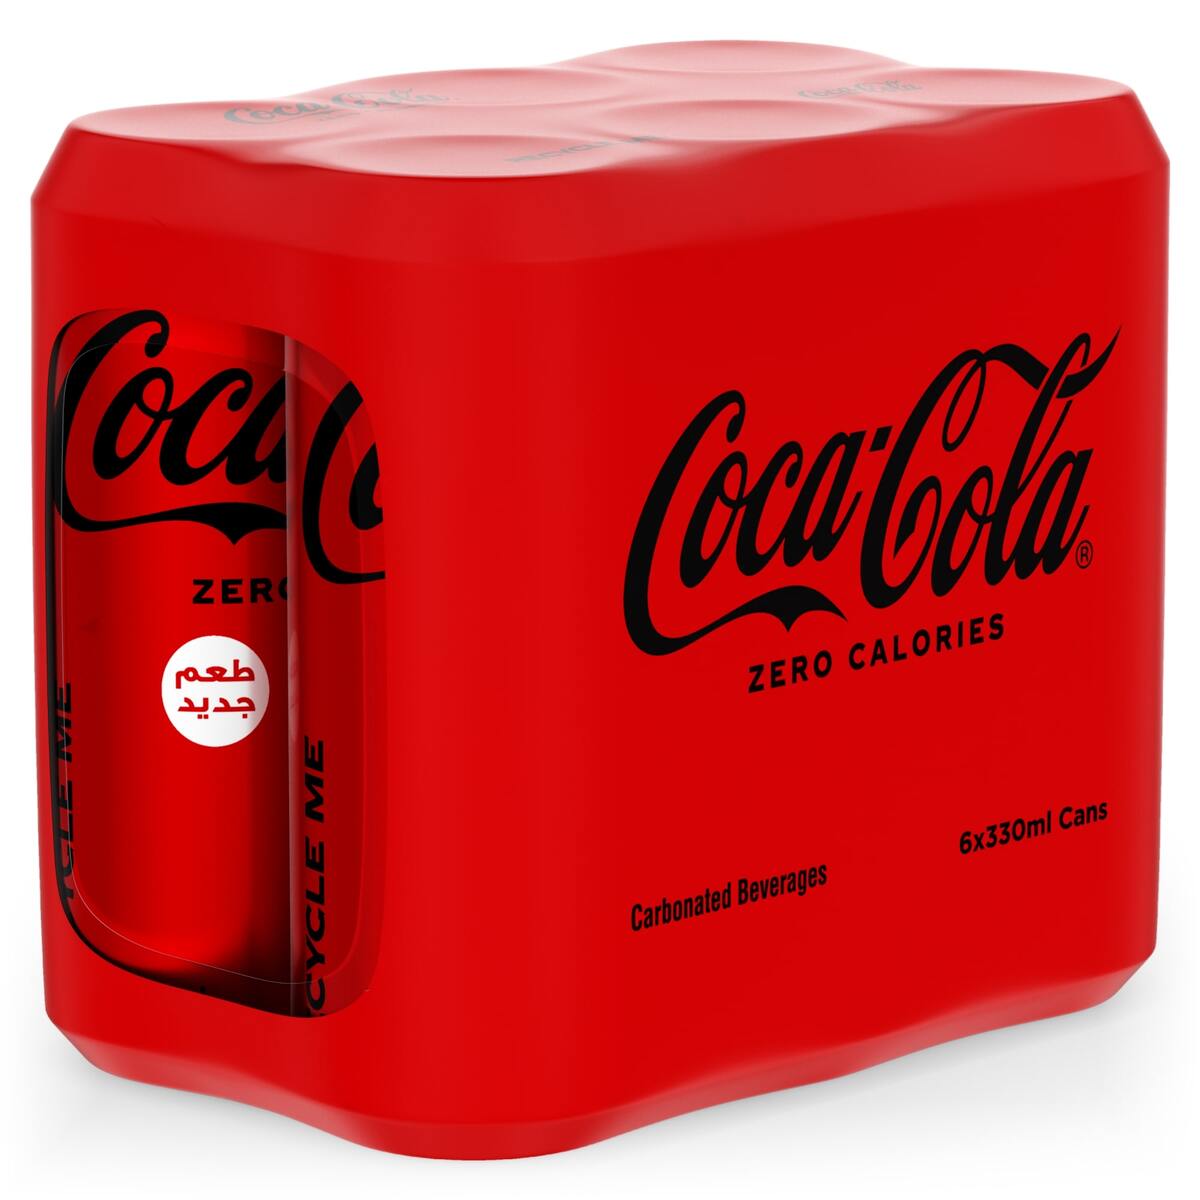 Coca-Cola Zero 24 x 330 ml